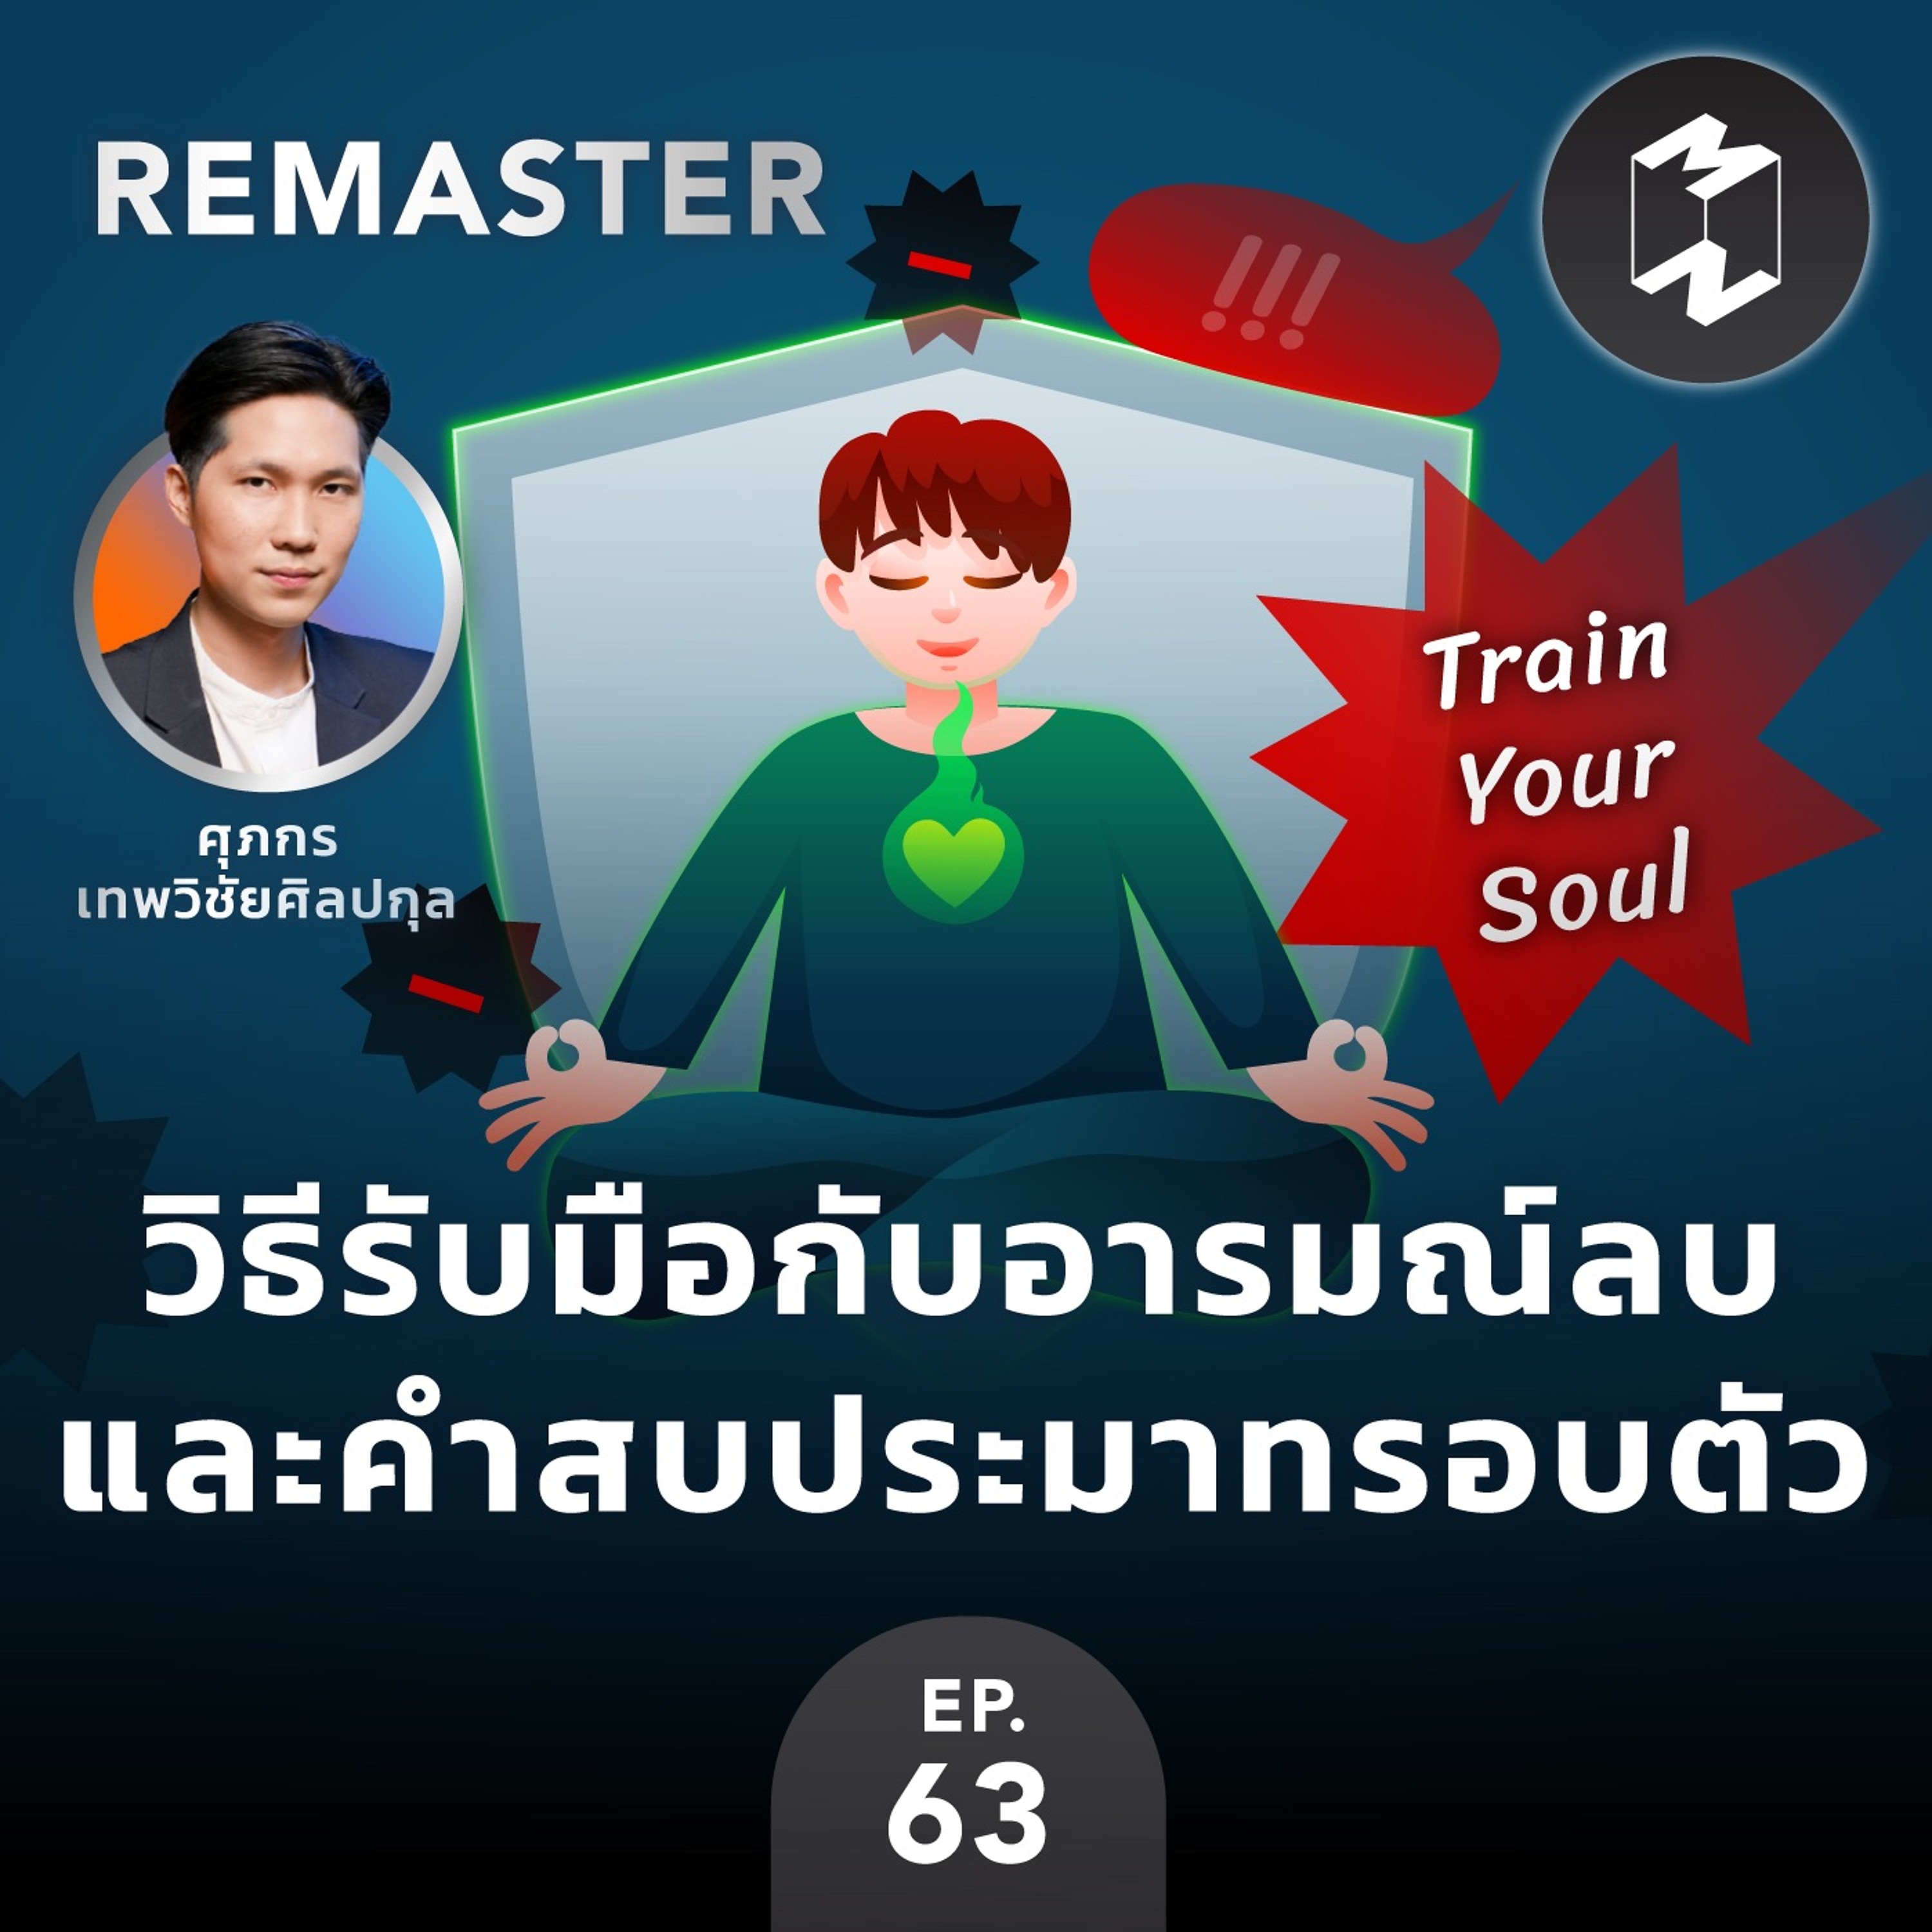 Train Your Soul วิธีรับมือกับอารมณ์ลบและคำสบประมาทรอบตัว | MM Remaster EP.63